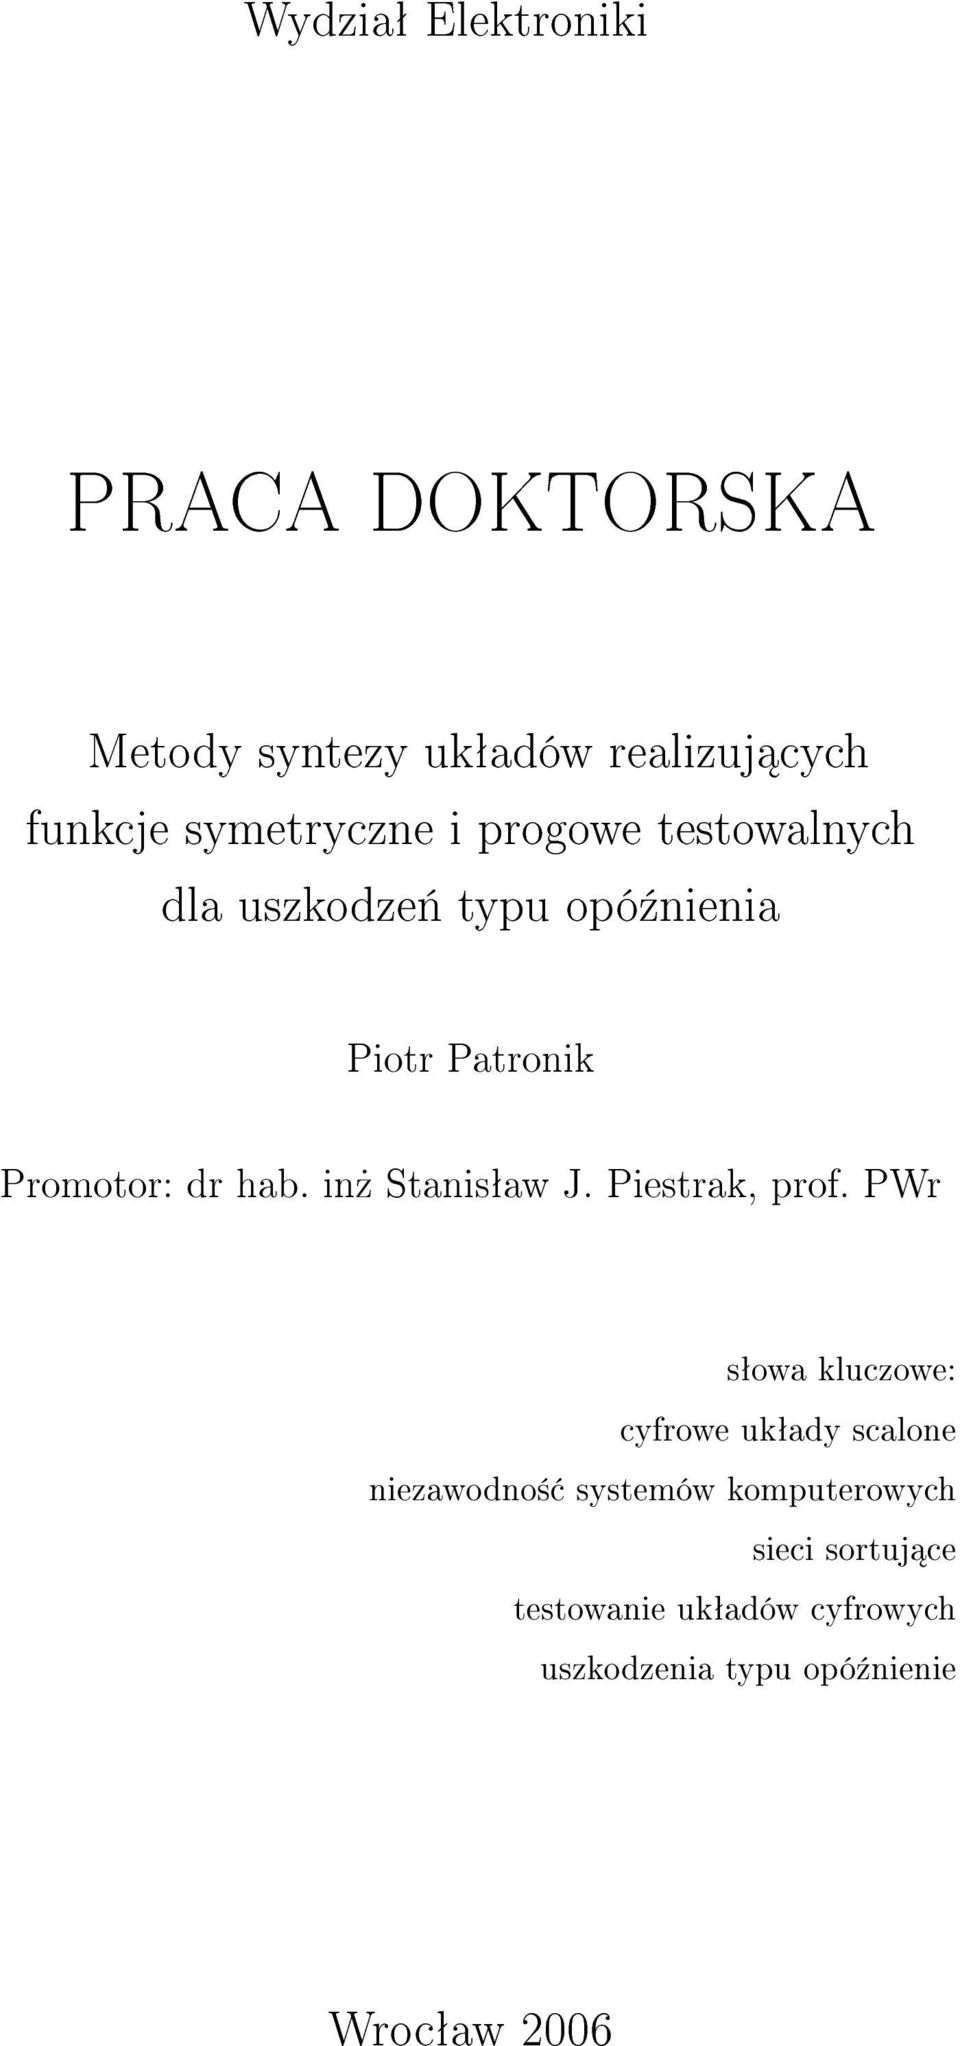 in» Stanisªaw J. Piestrak, prof.